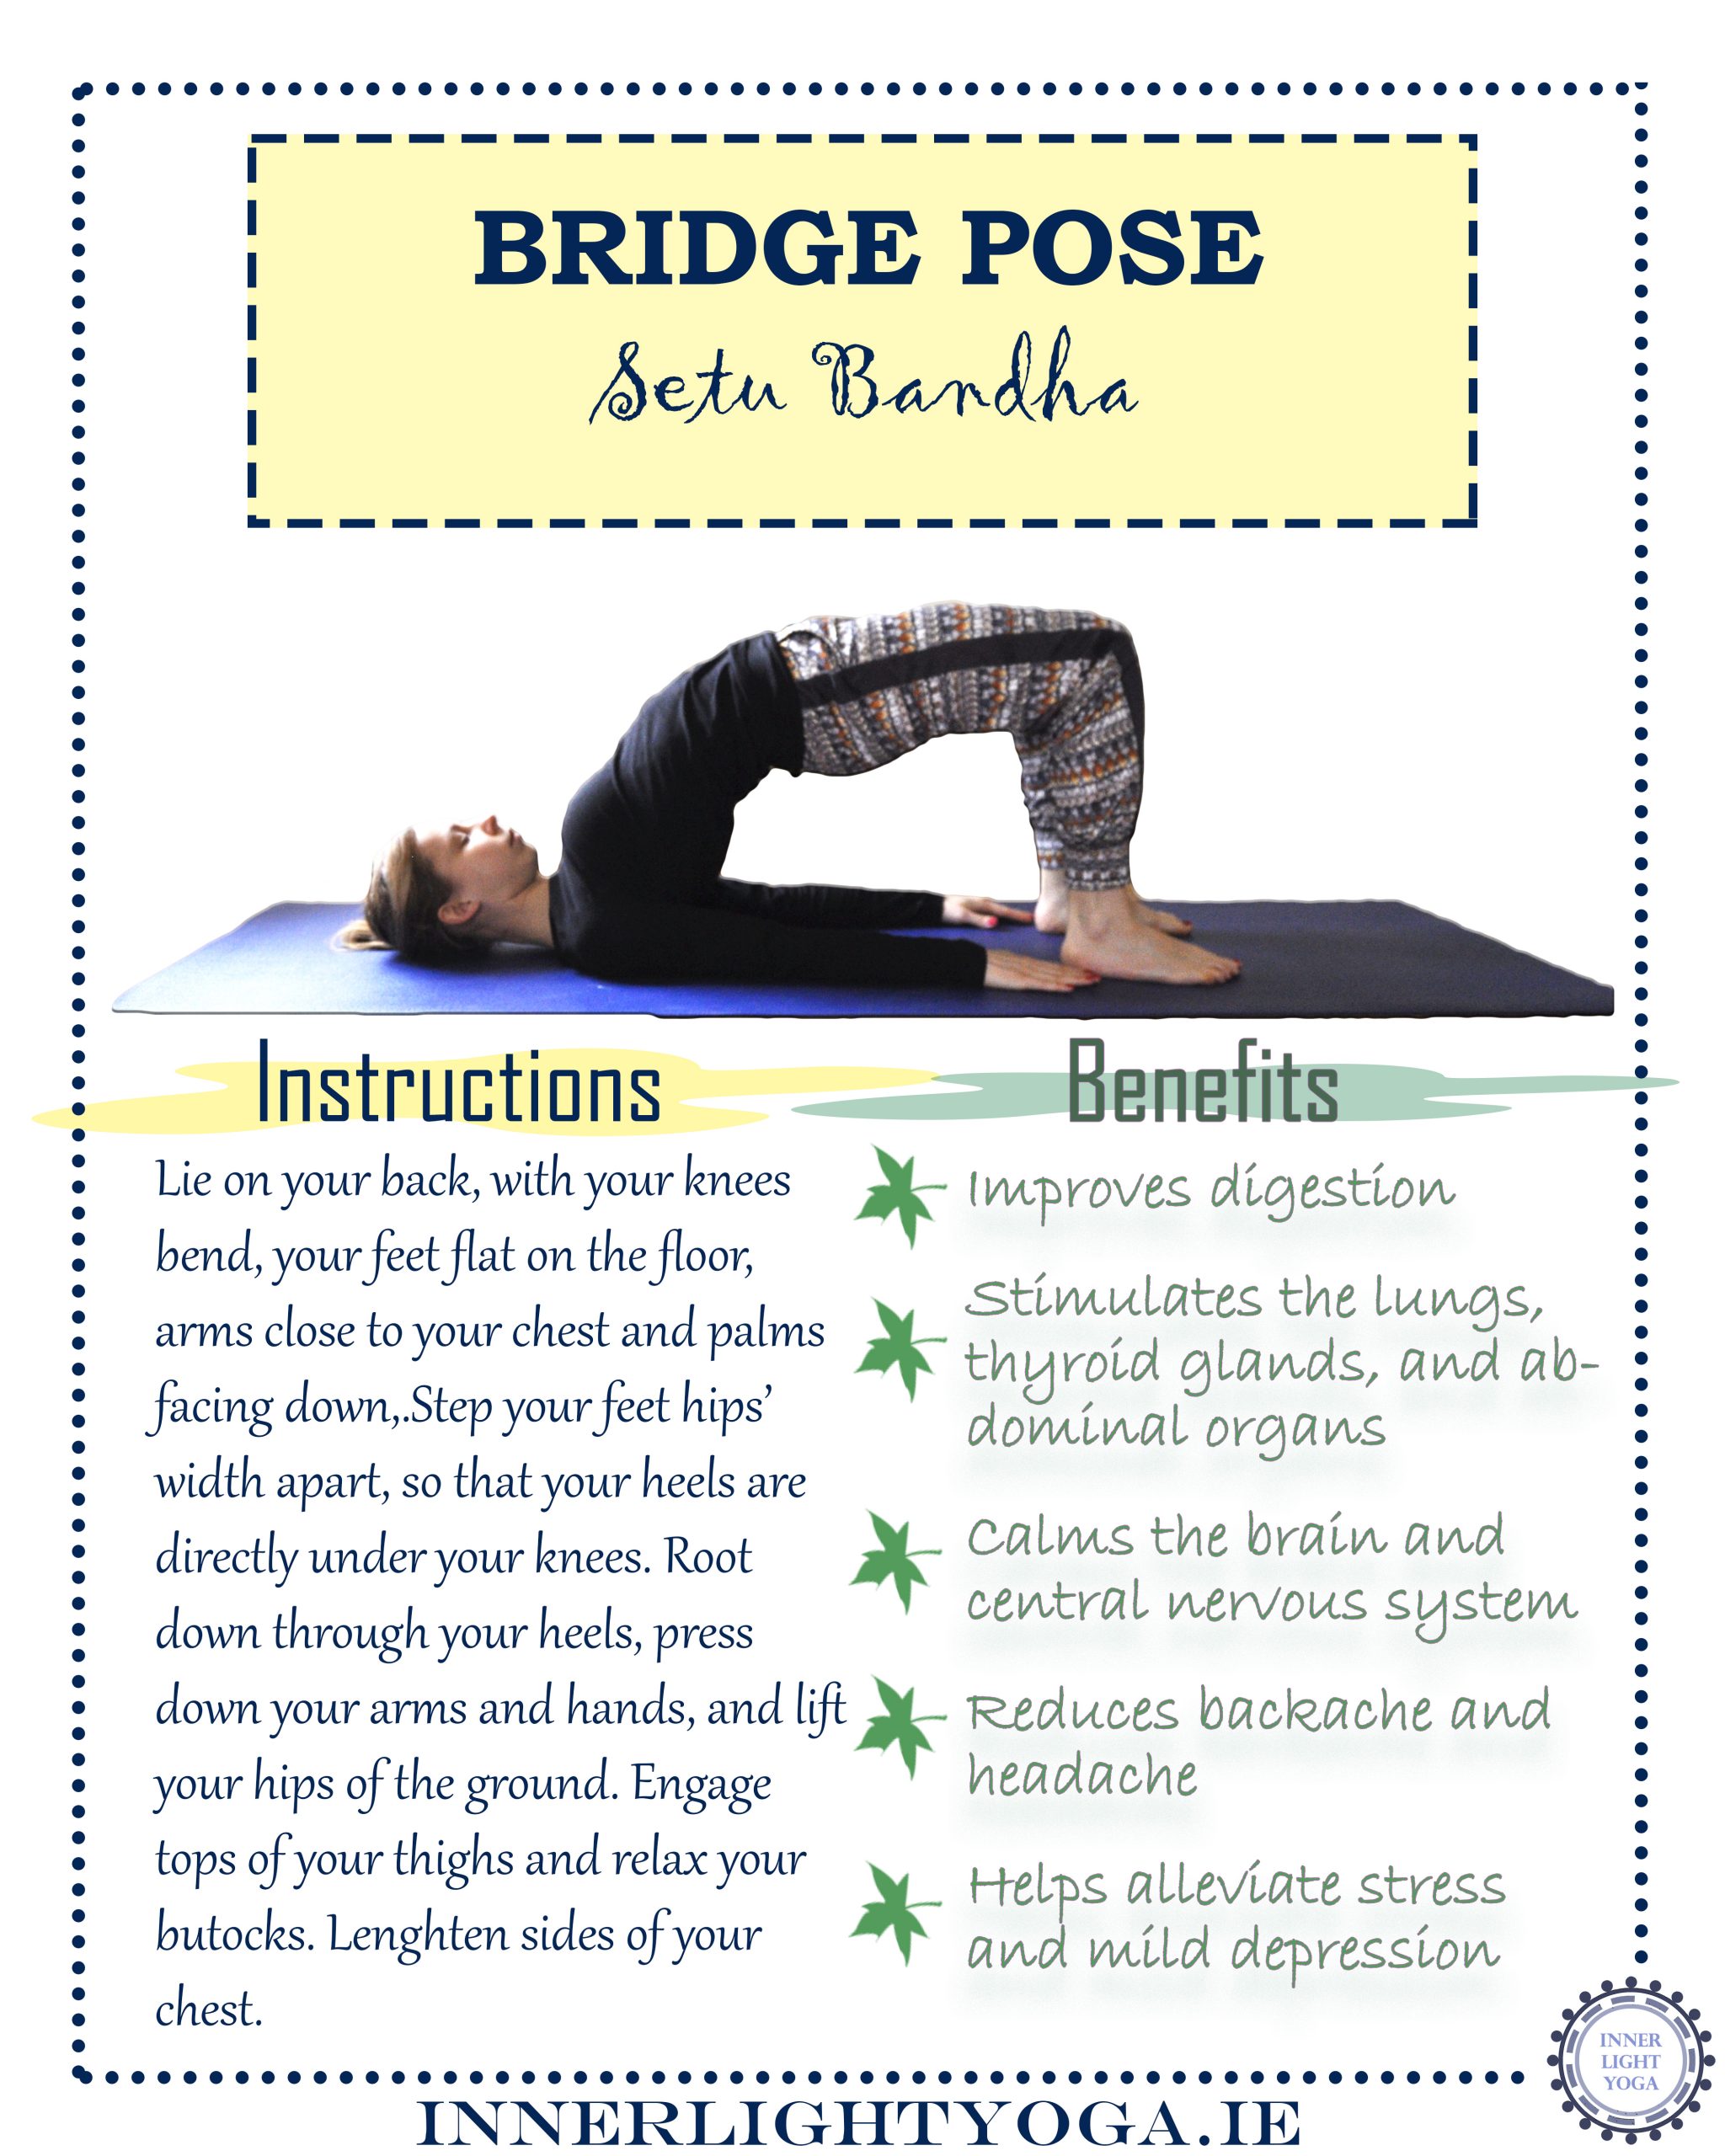 How to Do a Bridge Pose | Yoga - YouTube